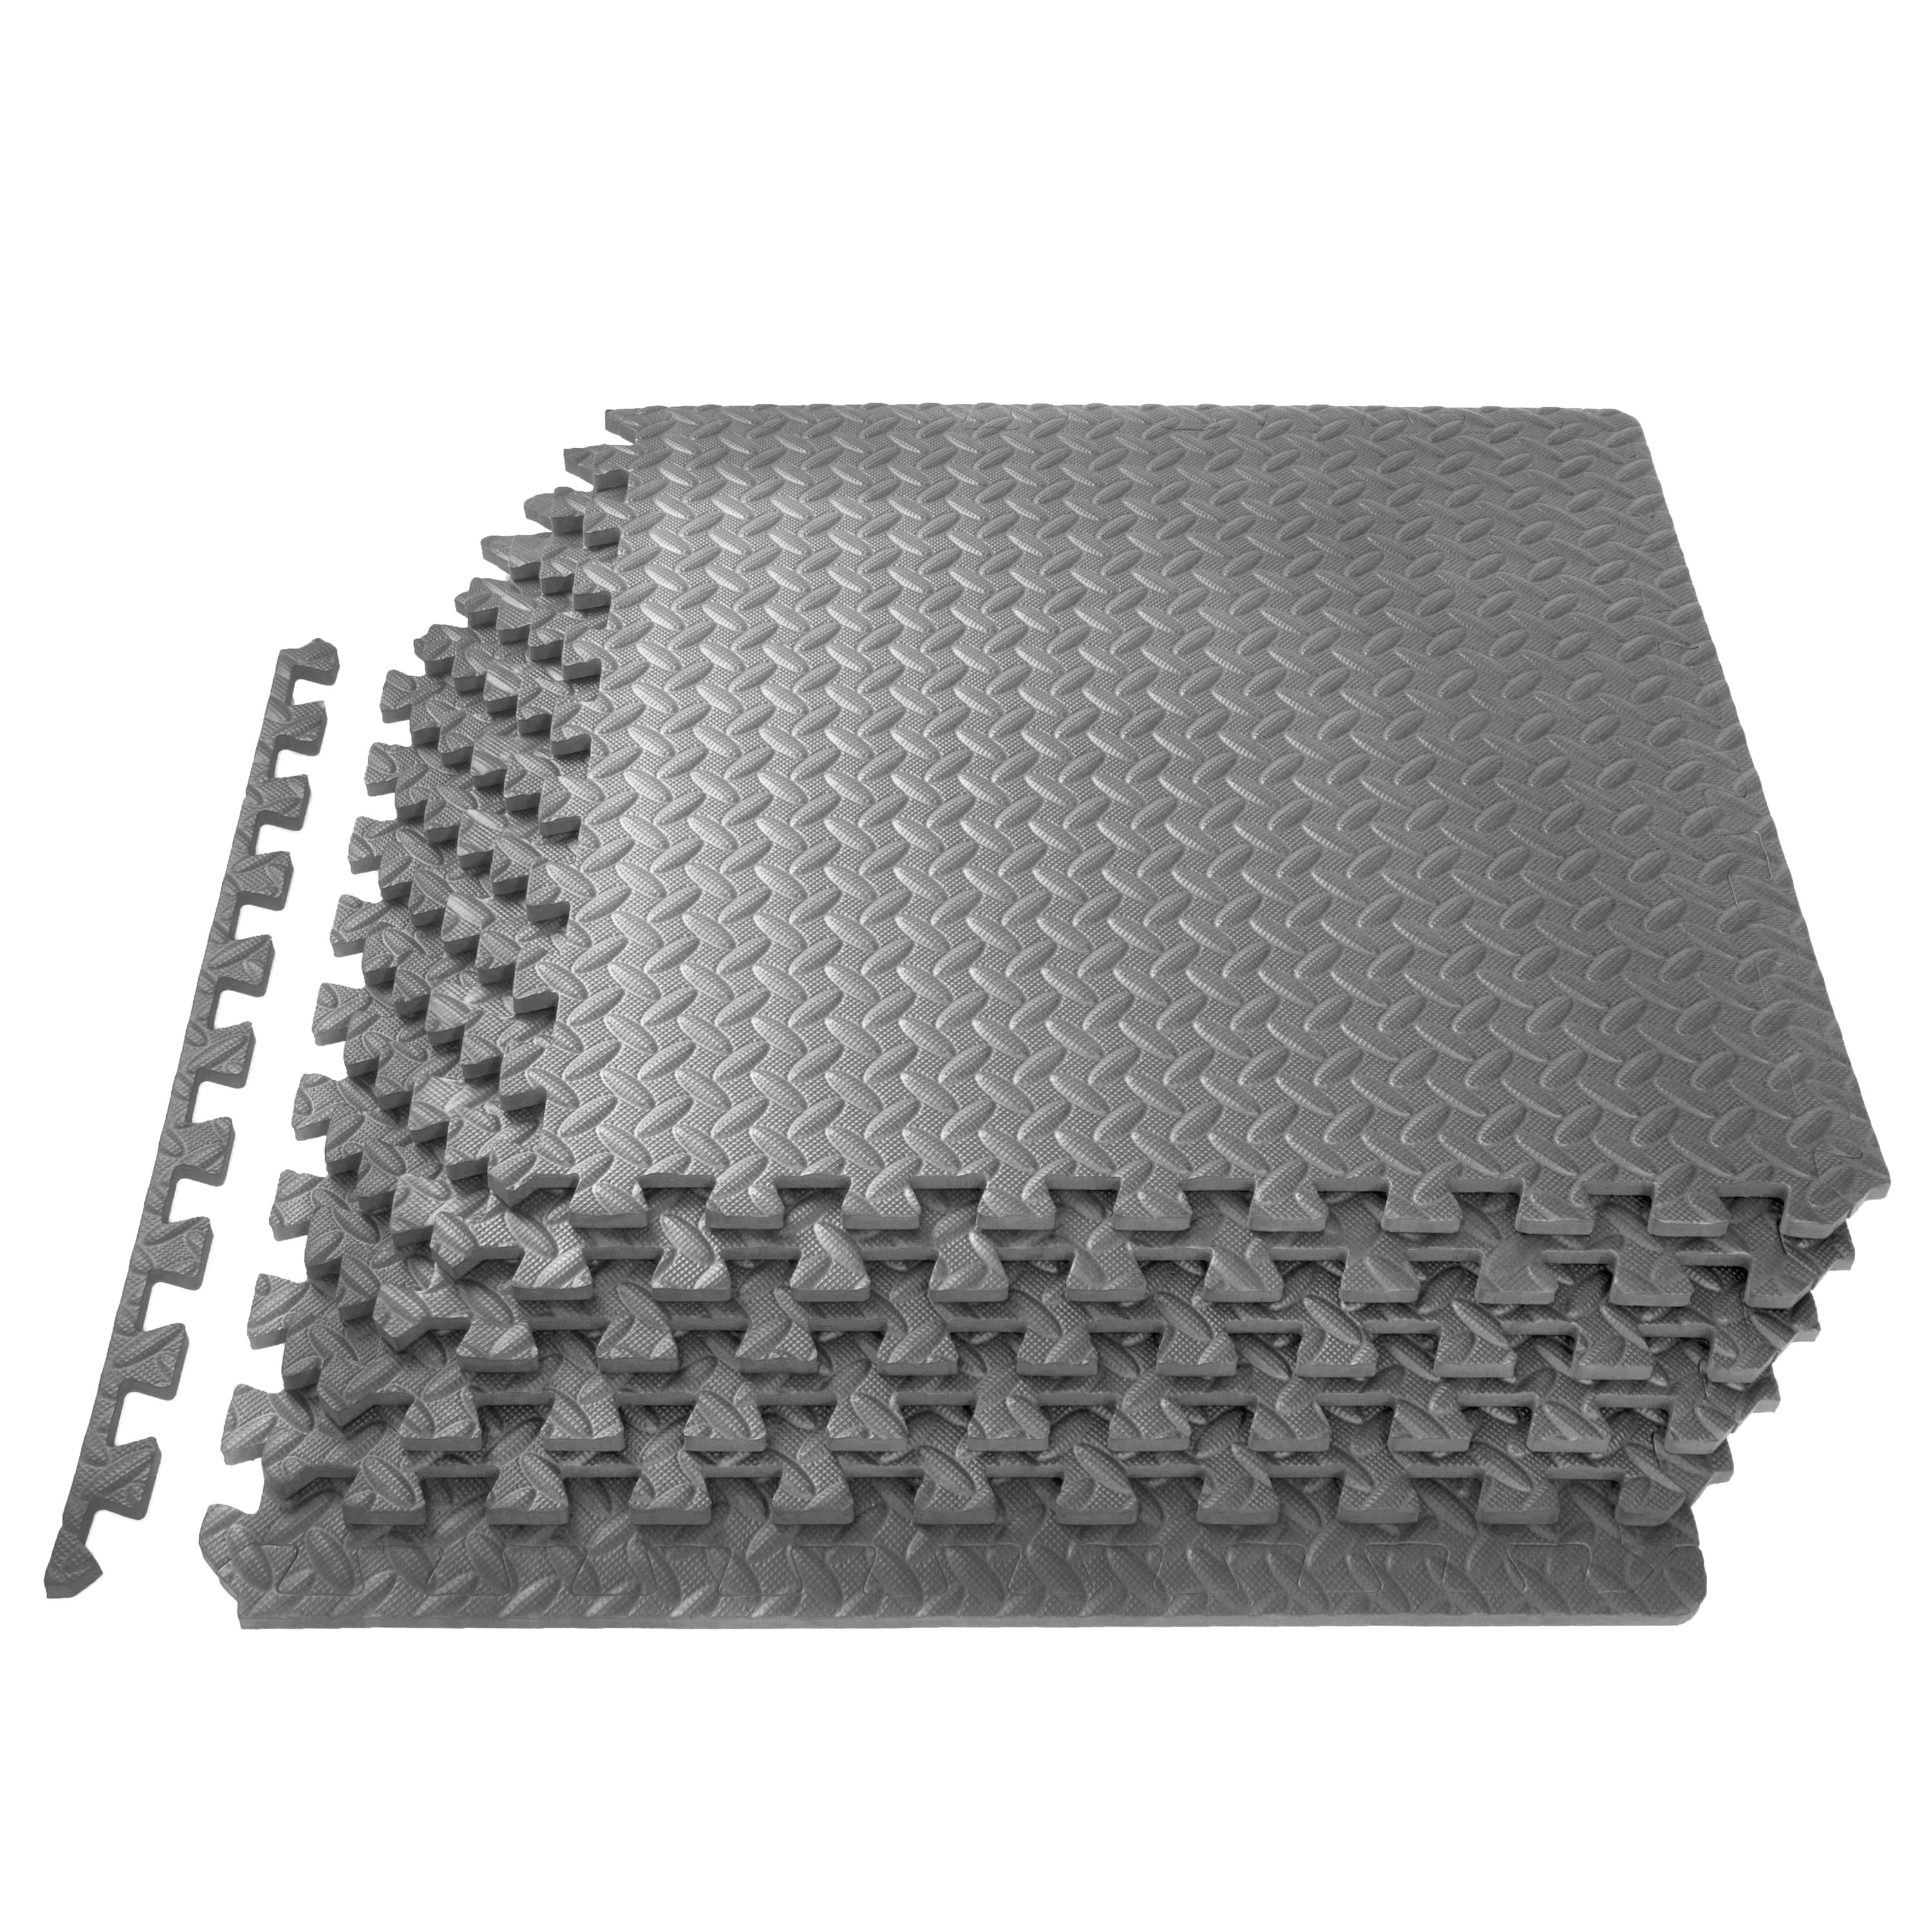 EVA Foam Interlocking Tiles Protective Floo Details about   ProsourceFit Puzzle Exercise Mat ½” 